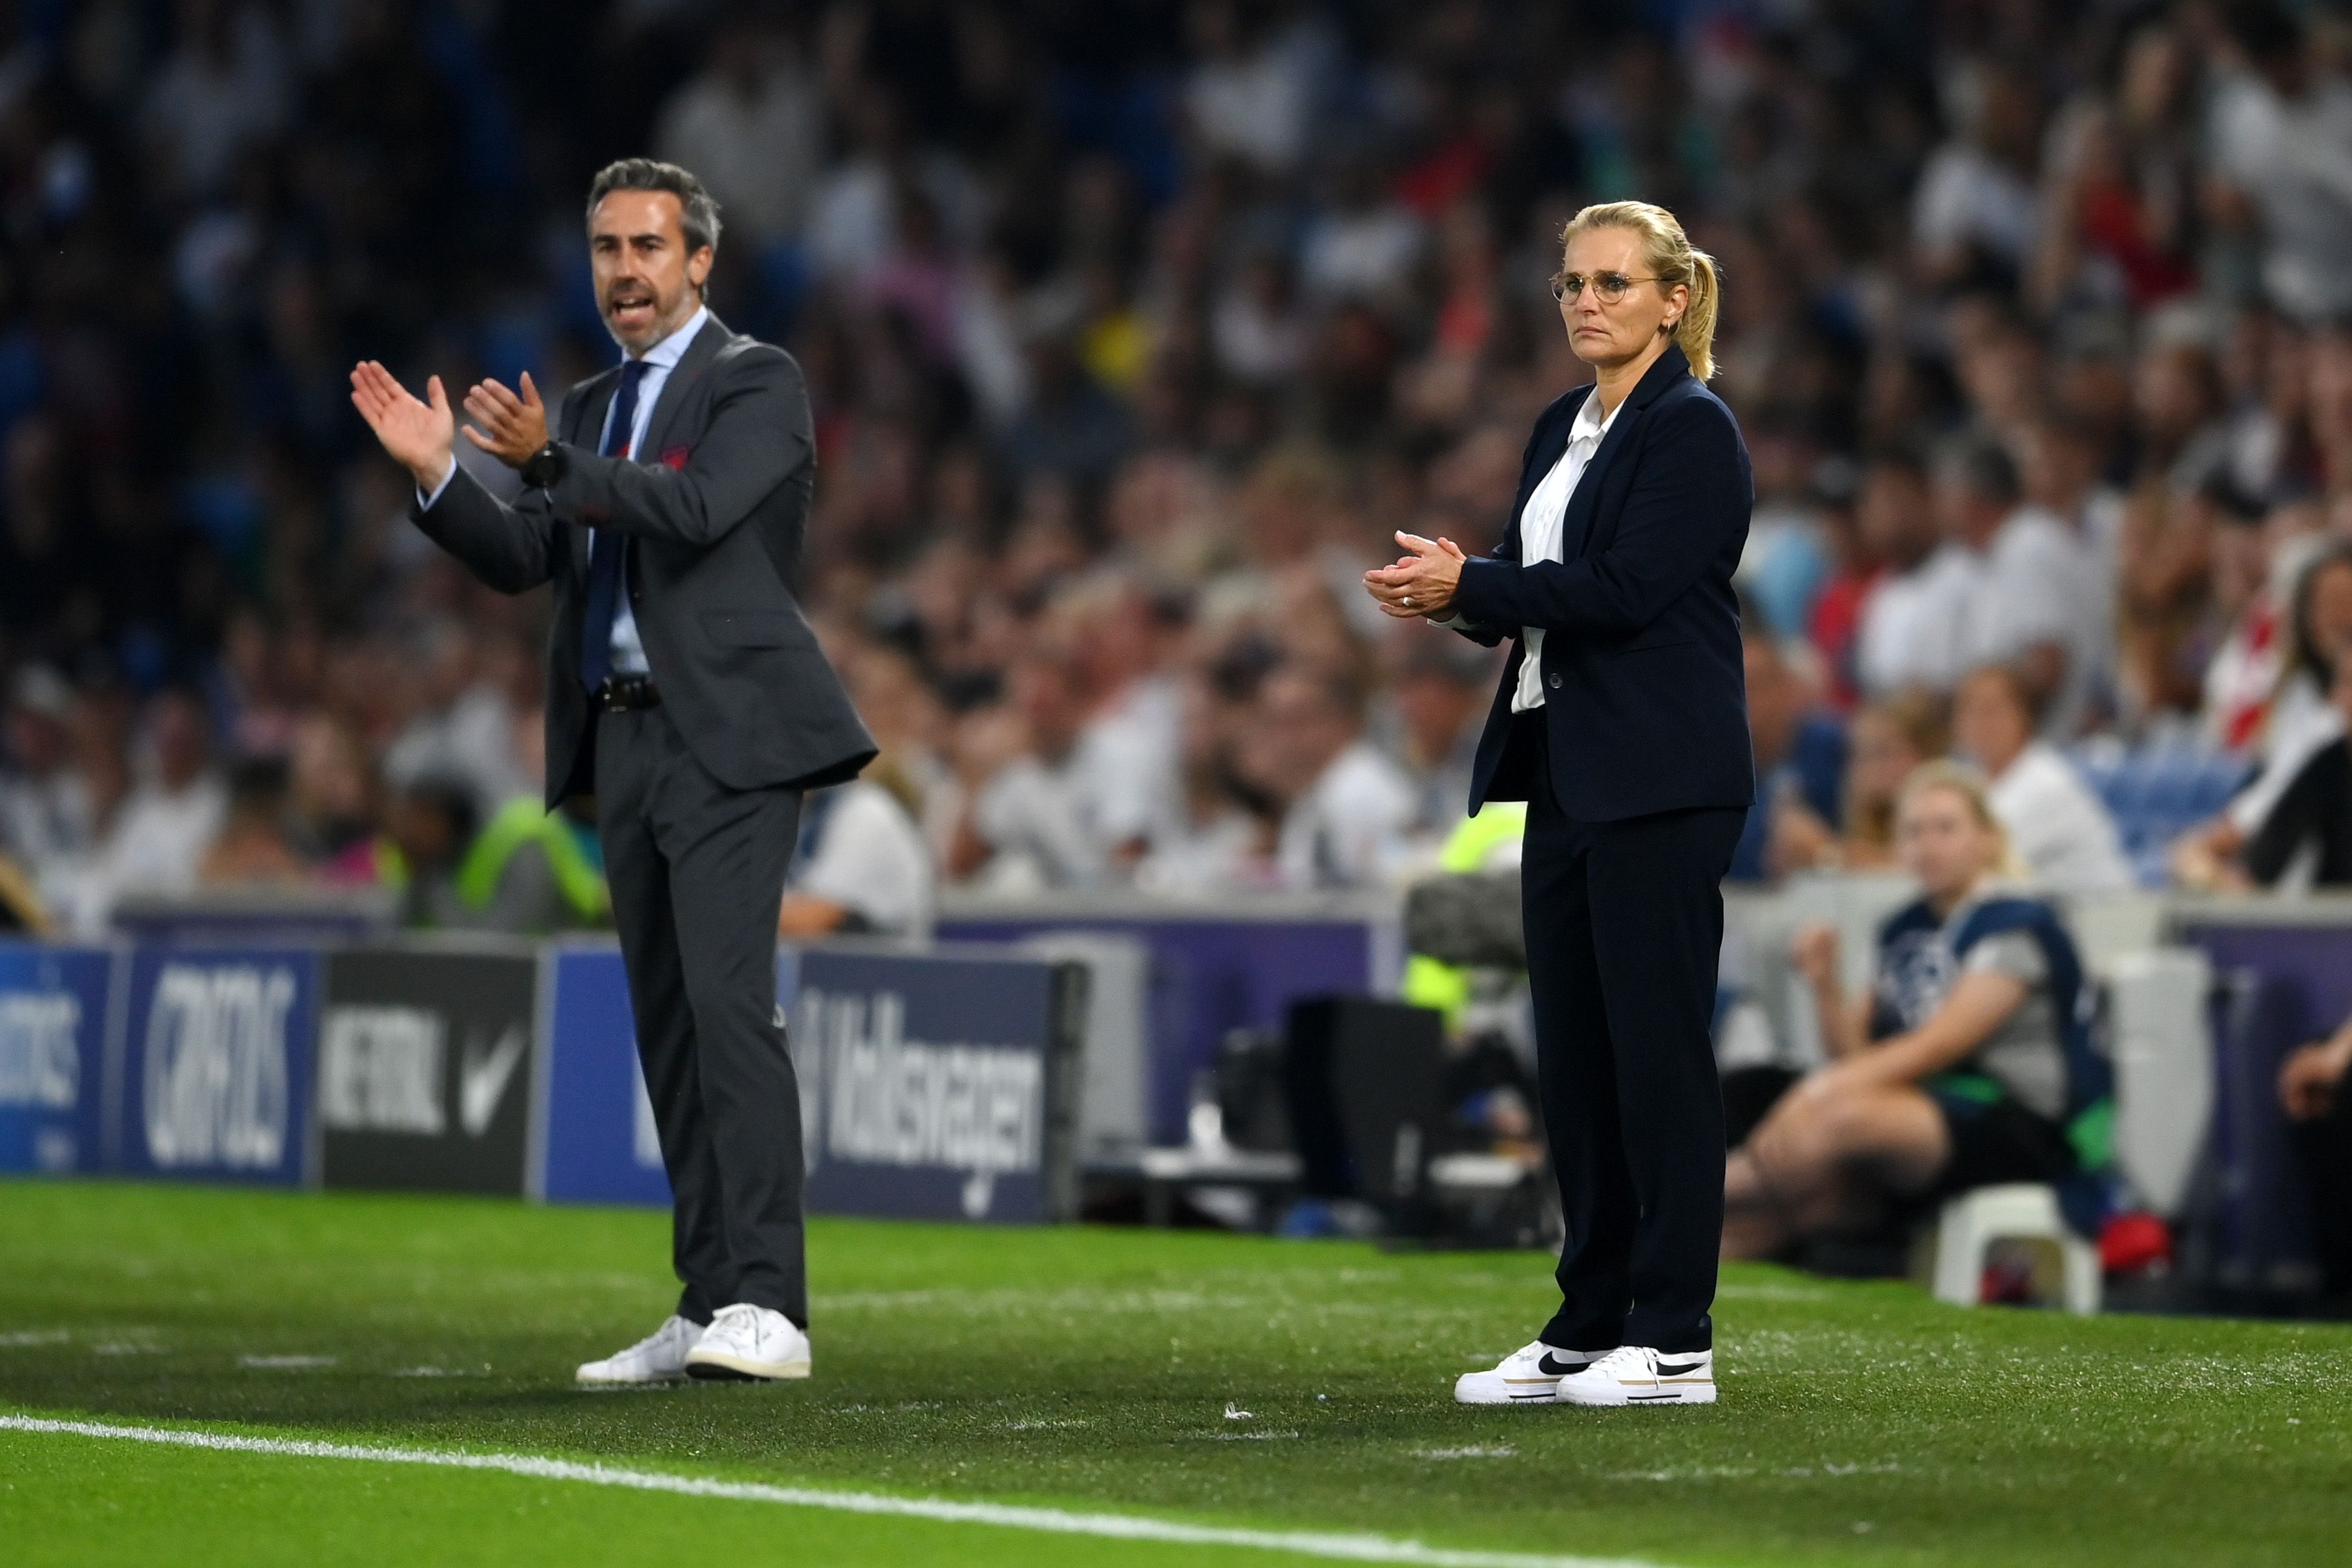 England manager Sarina Wiegman and Spain manager Jorge Vilda